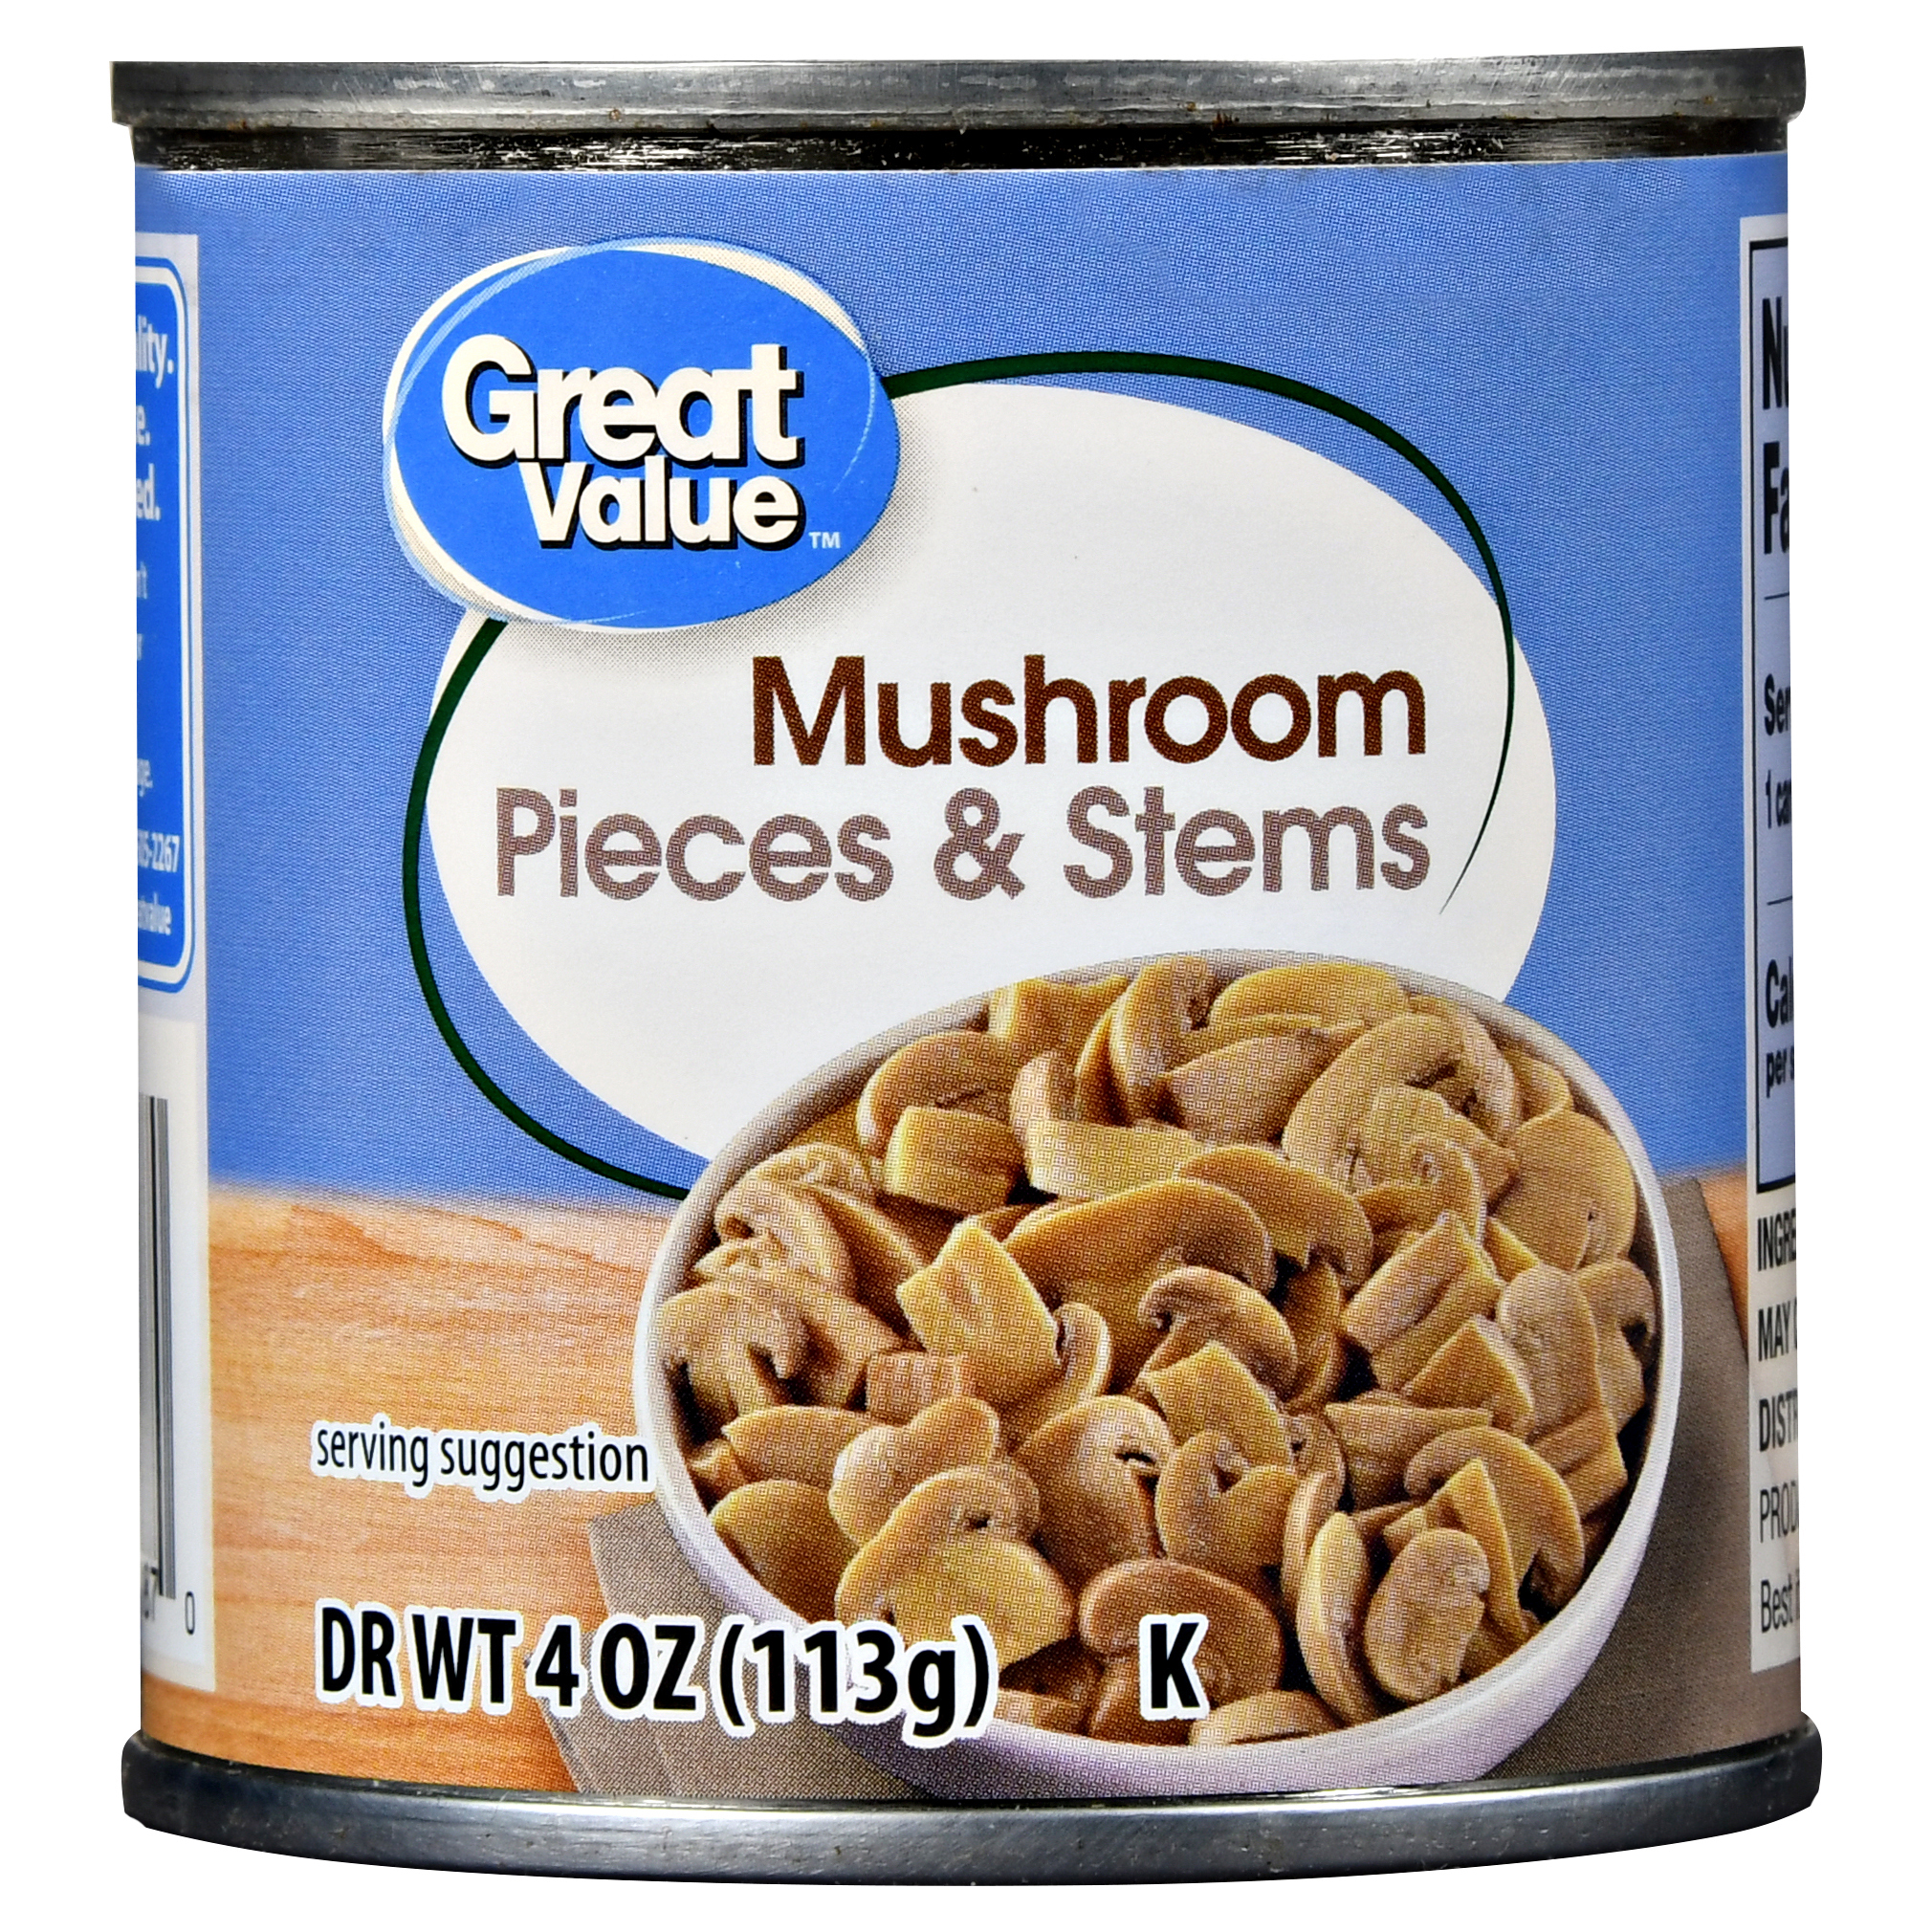 Great Value Mushroom Pieces & Stems, 4 Oz Image